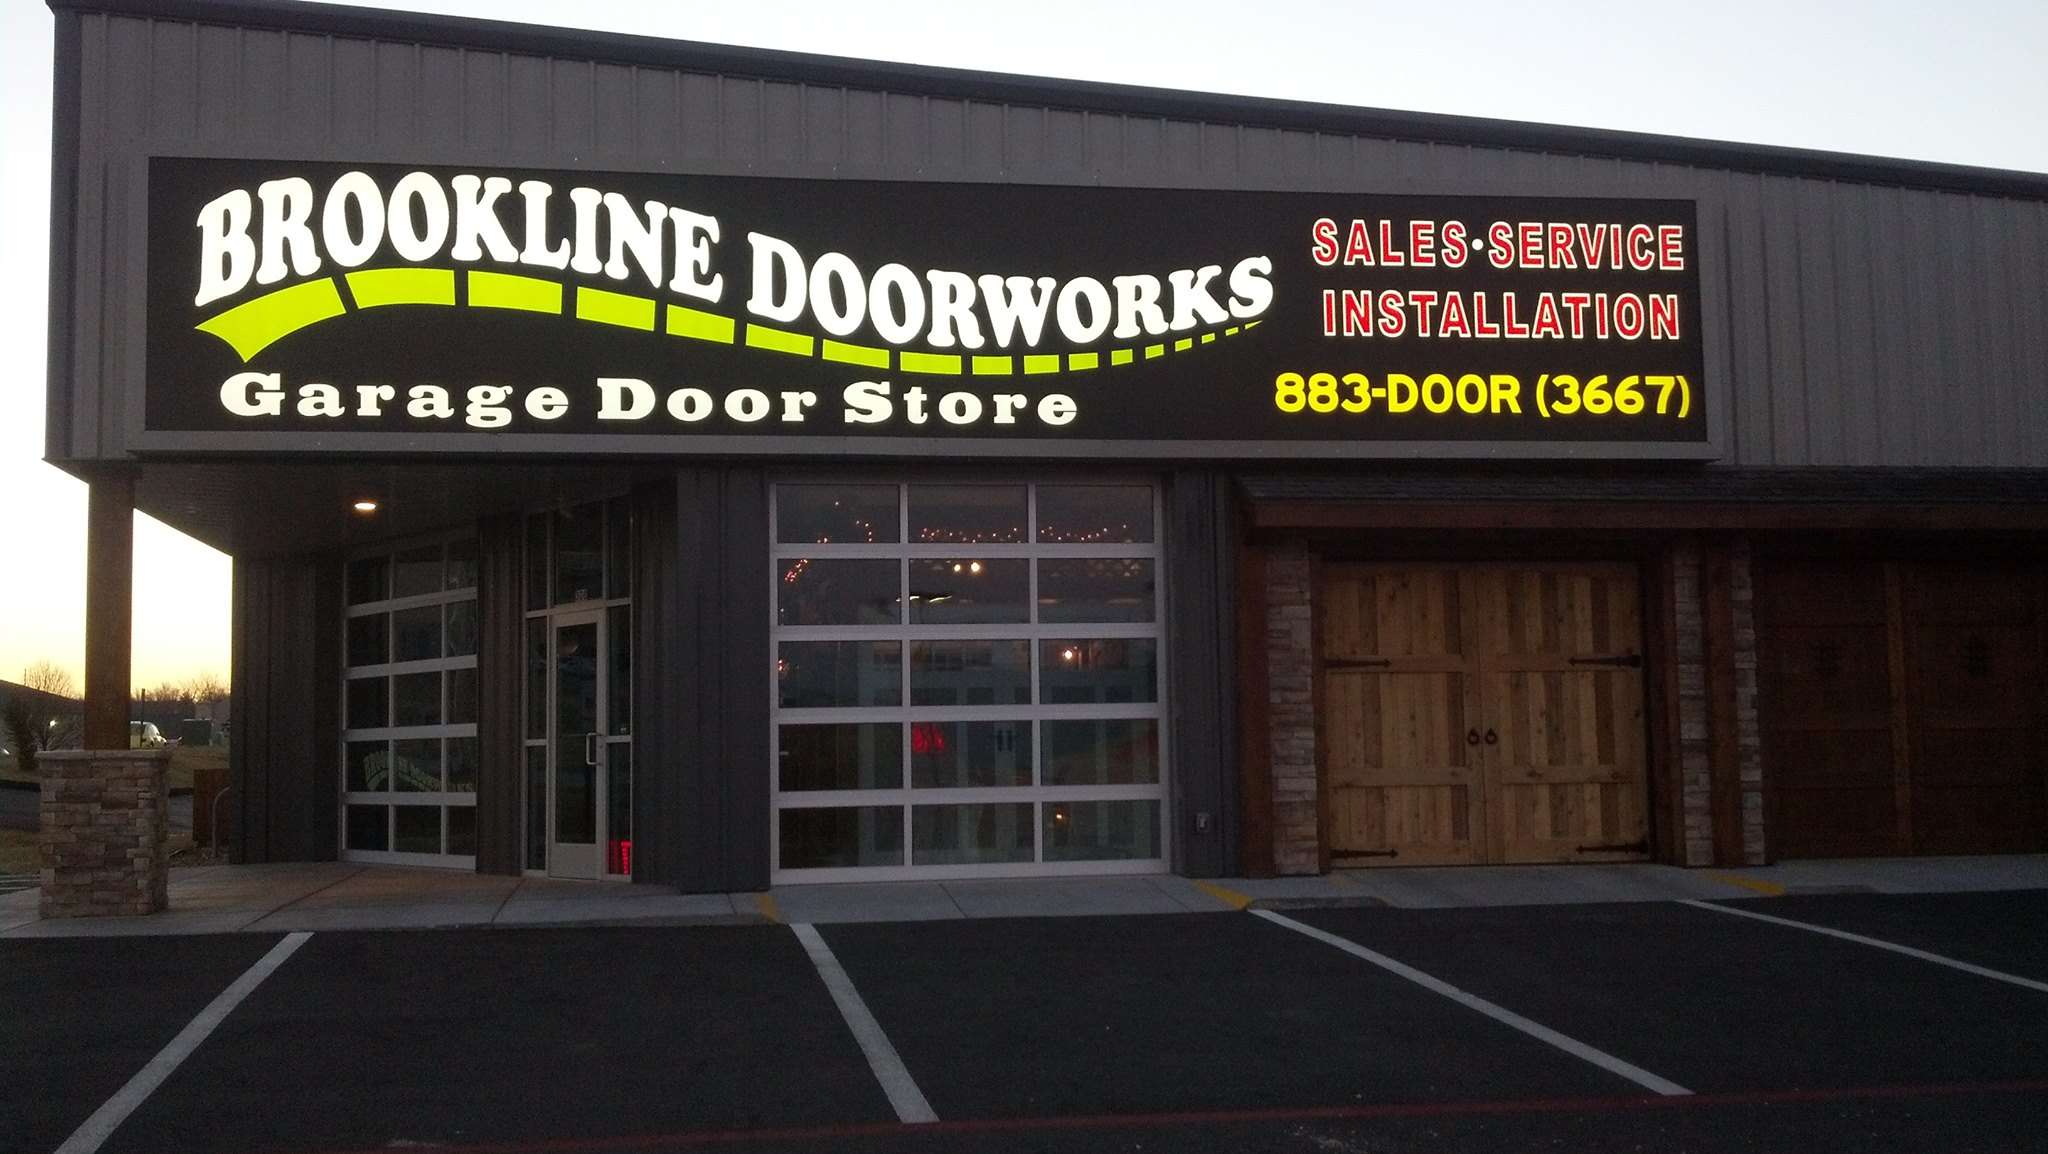 Brookline Doorworks Logo